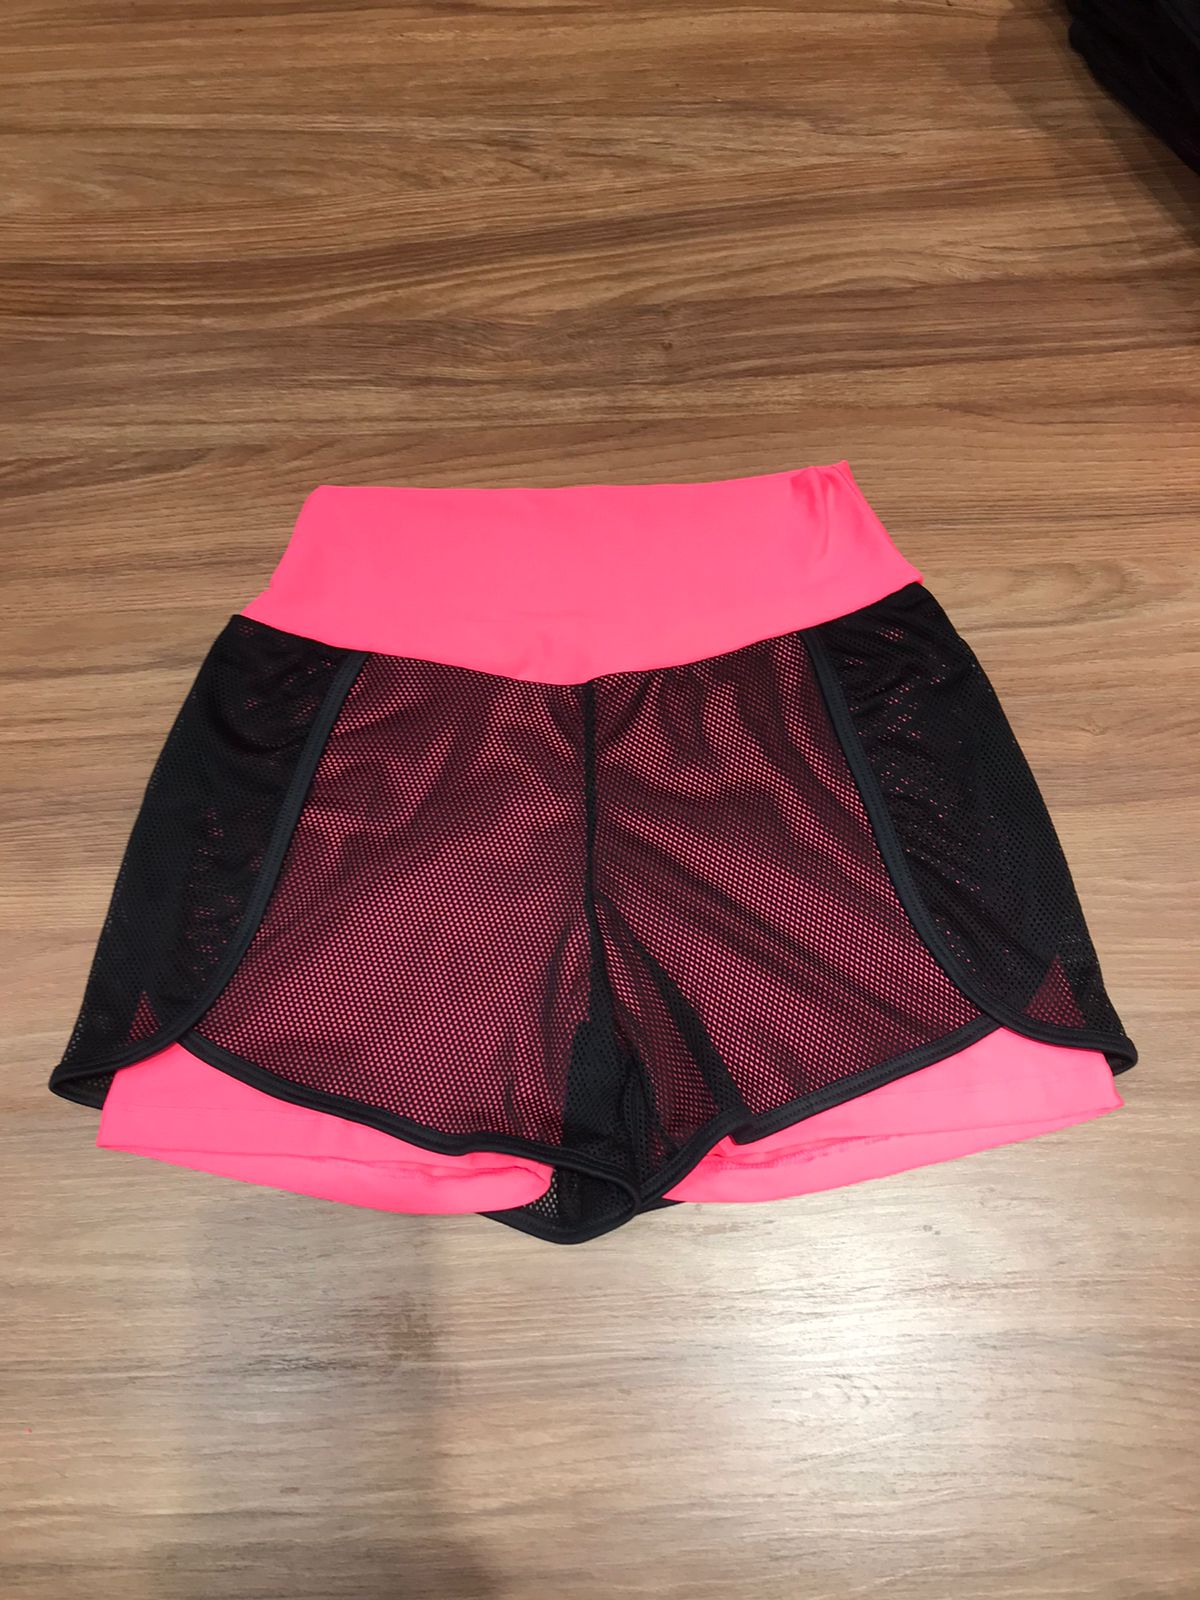 BM03 Shorts Feminino com tela em Neon.